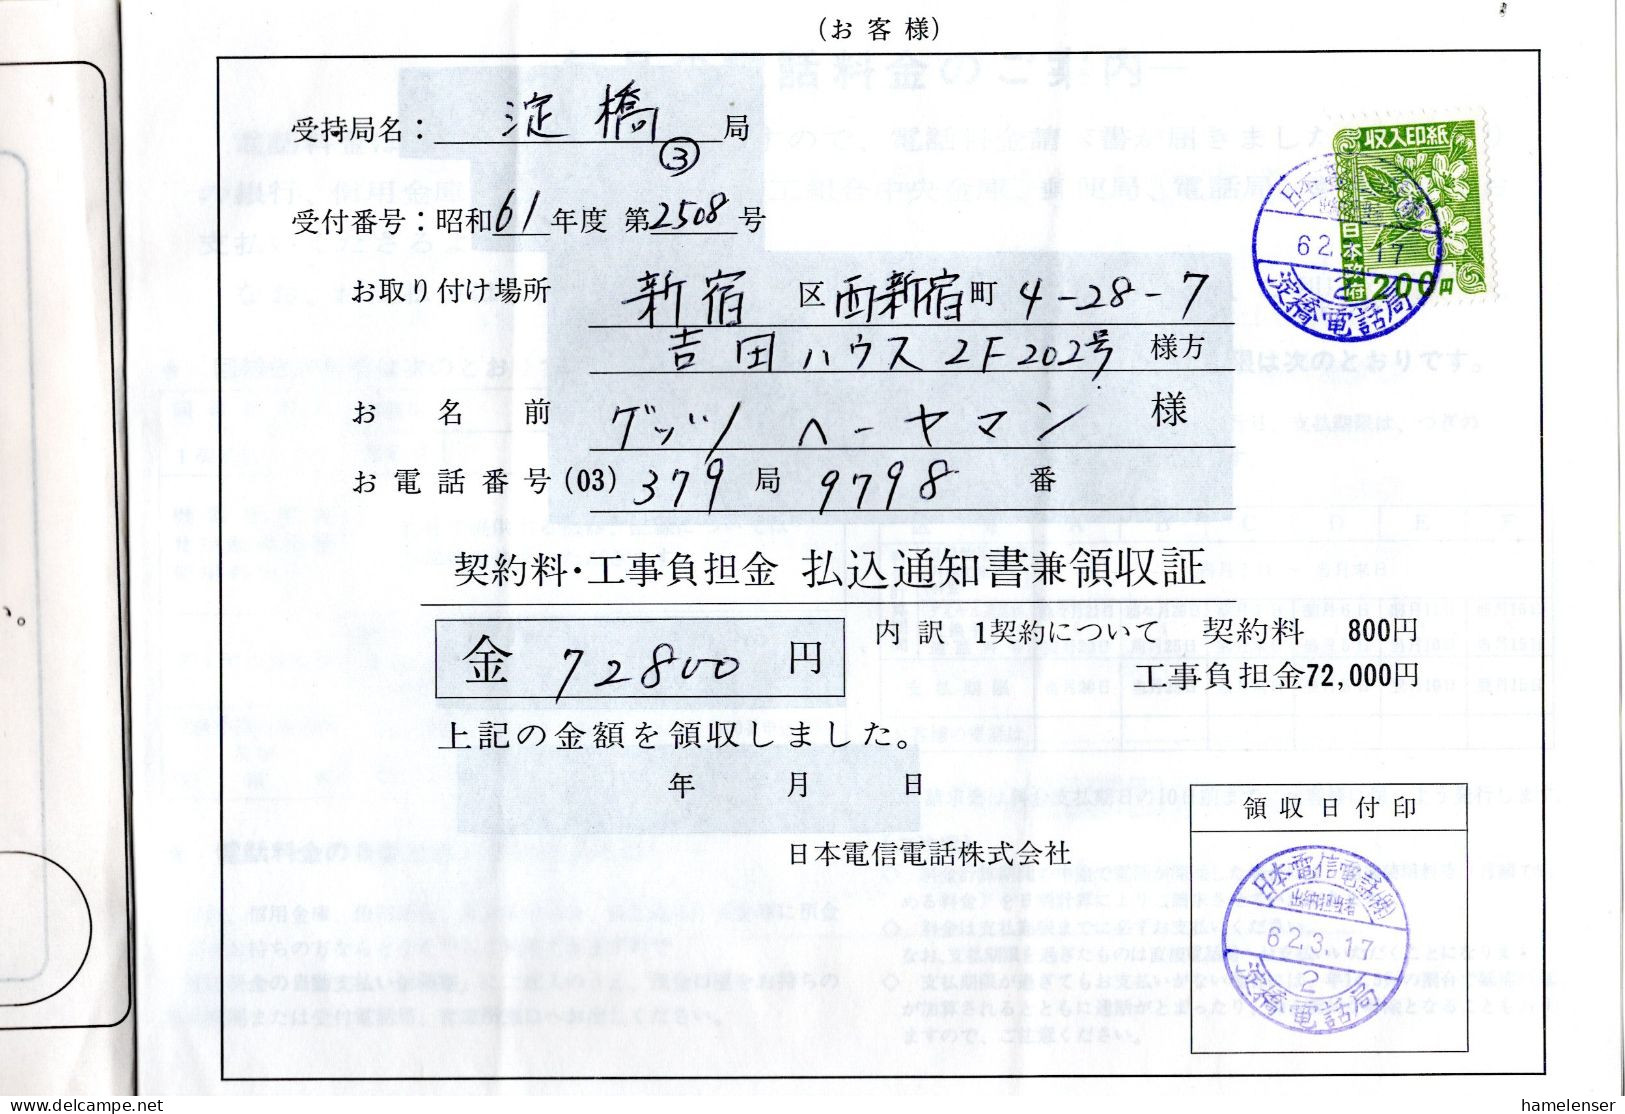 L65575 - Japan - 1987 - ¥200 Stempelmarke EF A Fernmeldevertragsgrundgebuehrquittung, NTT-Filiale Yodobashi, Tokyo - Seals Of Generality